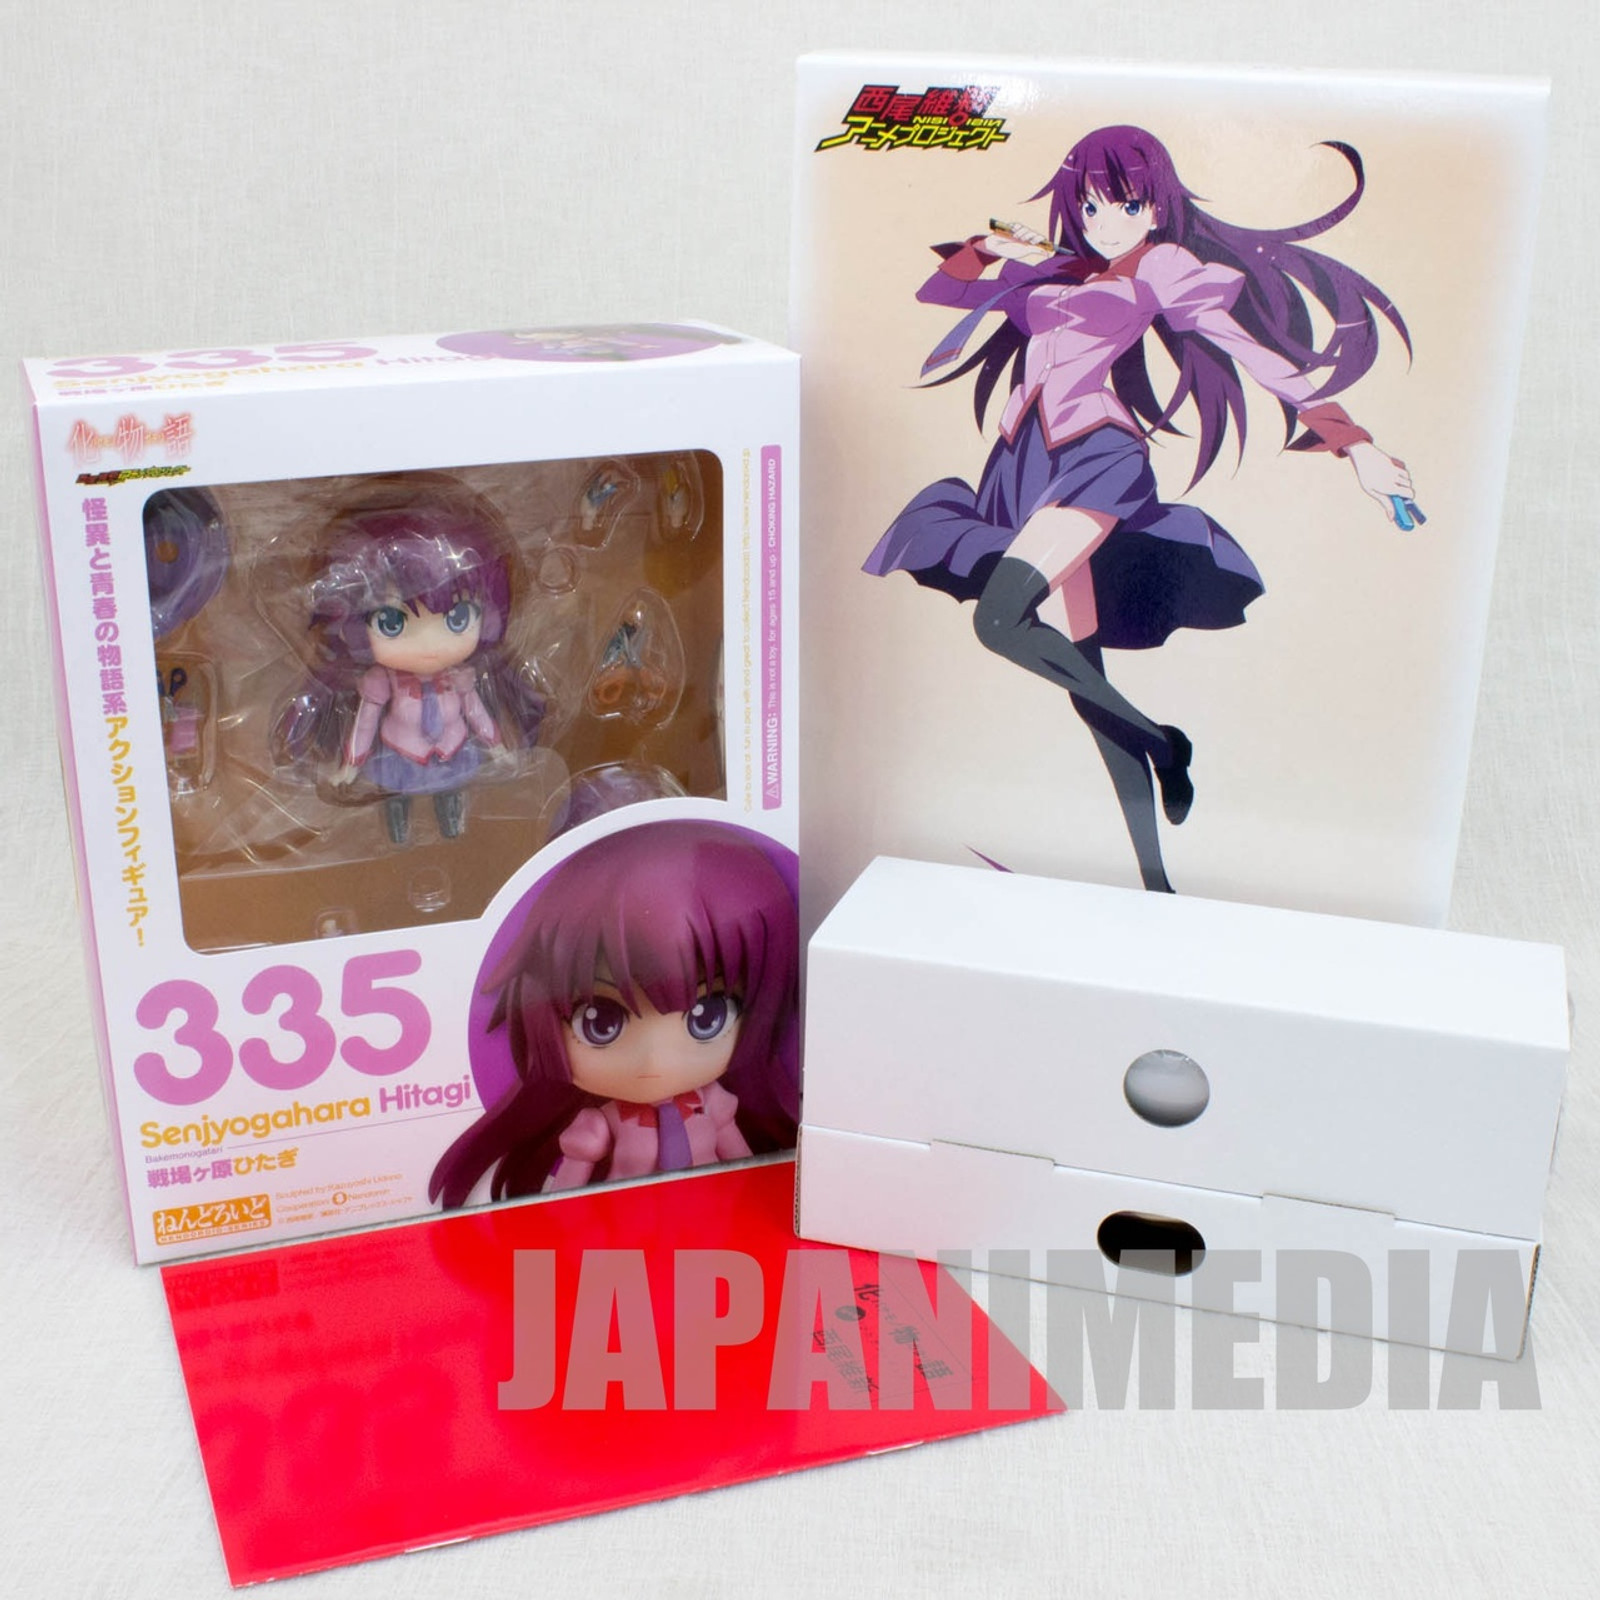 Bakemonogatari Senjogahara Hitagi Premium Box Set Nendoroid Figure JAPAN ANIME Tracking number: